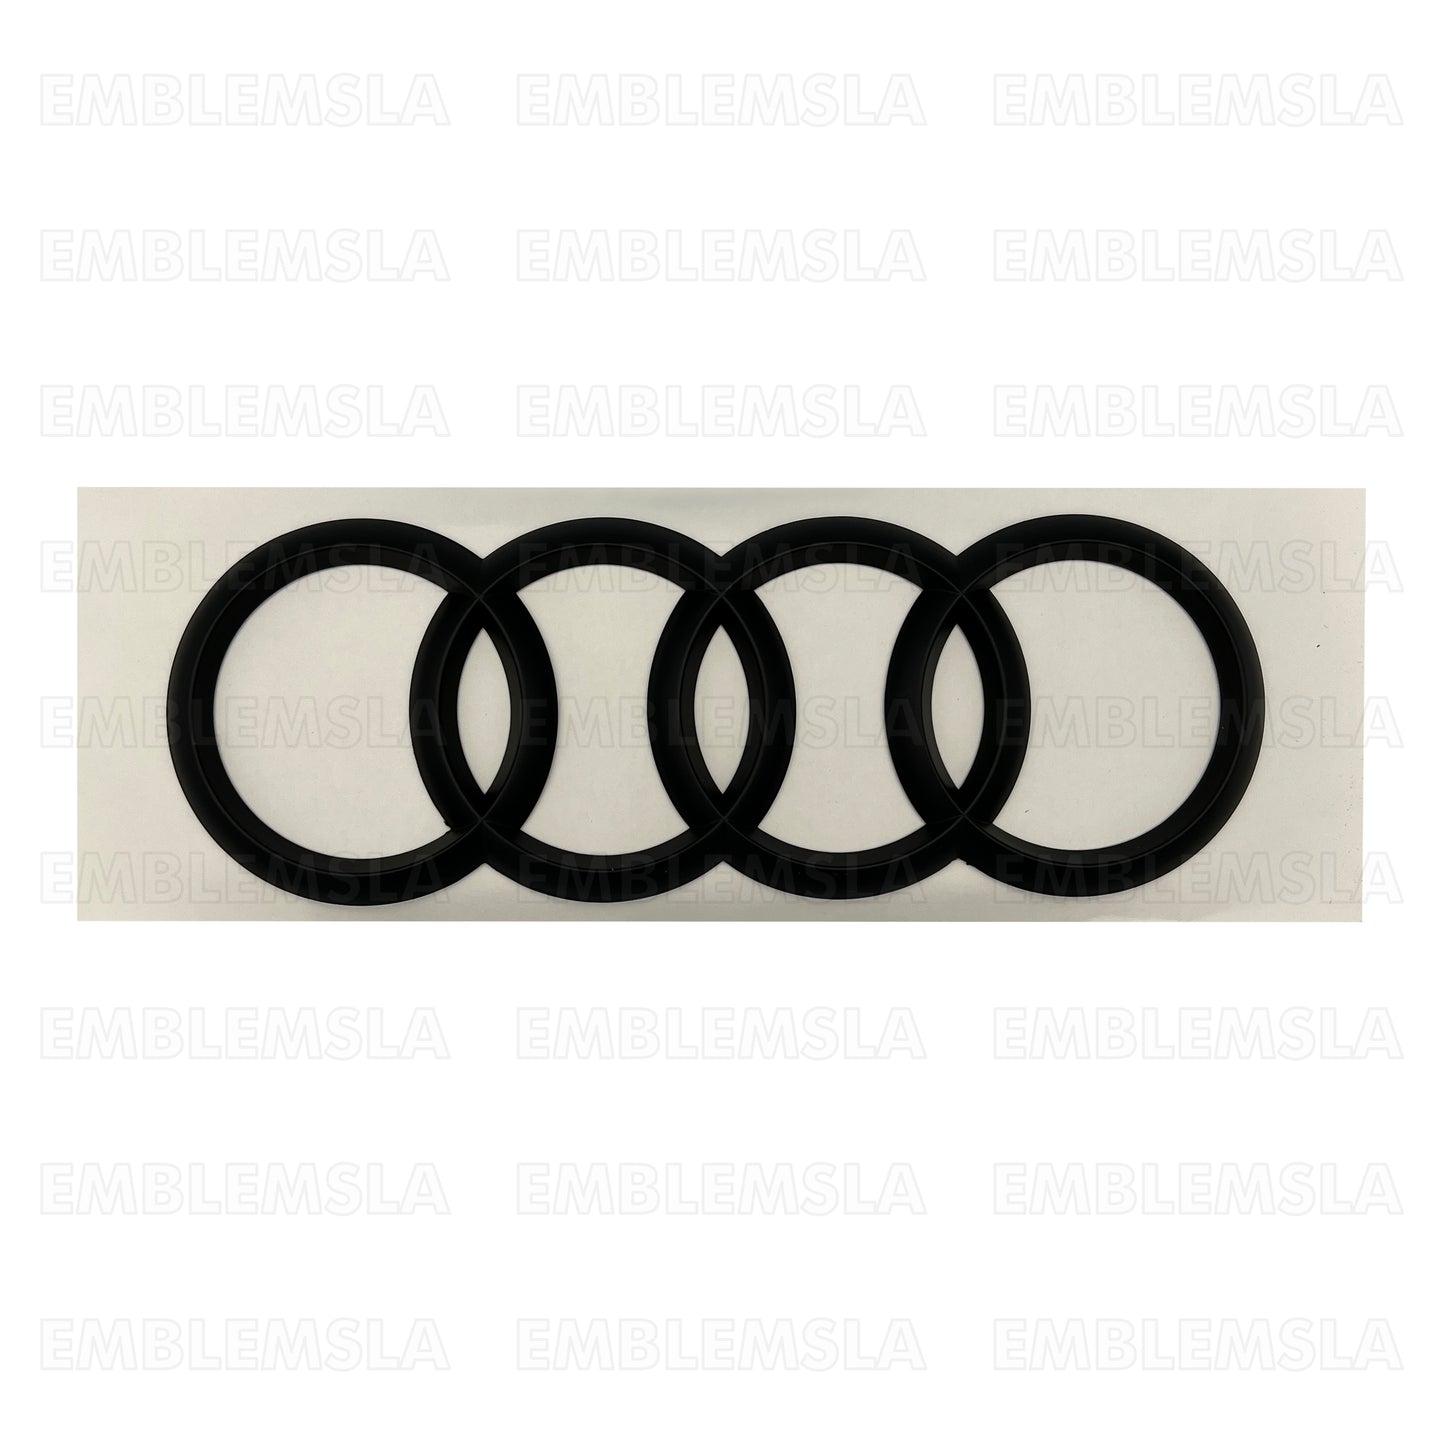 Audi Rear Rings Gloss Black 203mm Trunk Lid Emblem Badge Logo A4 S4 S6 A6 Q3 Q5